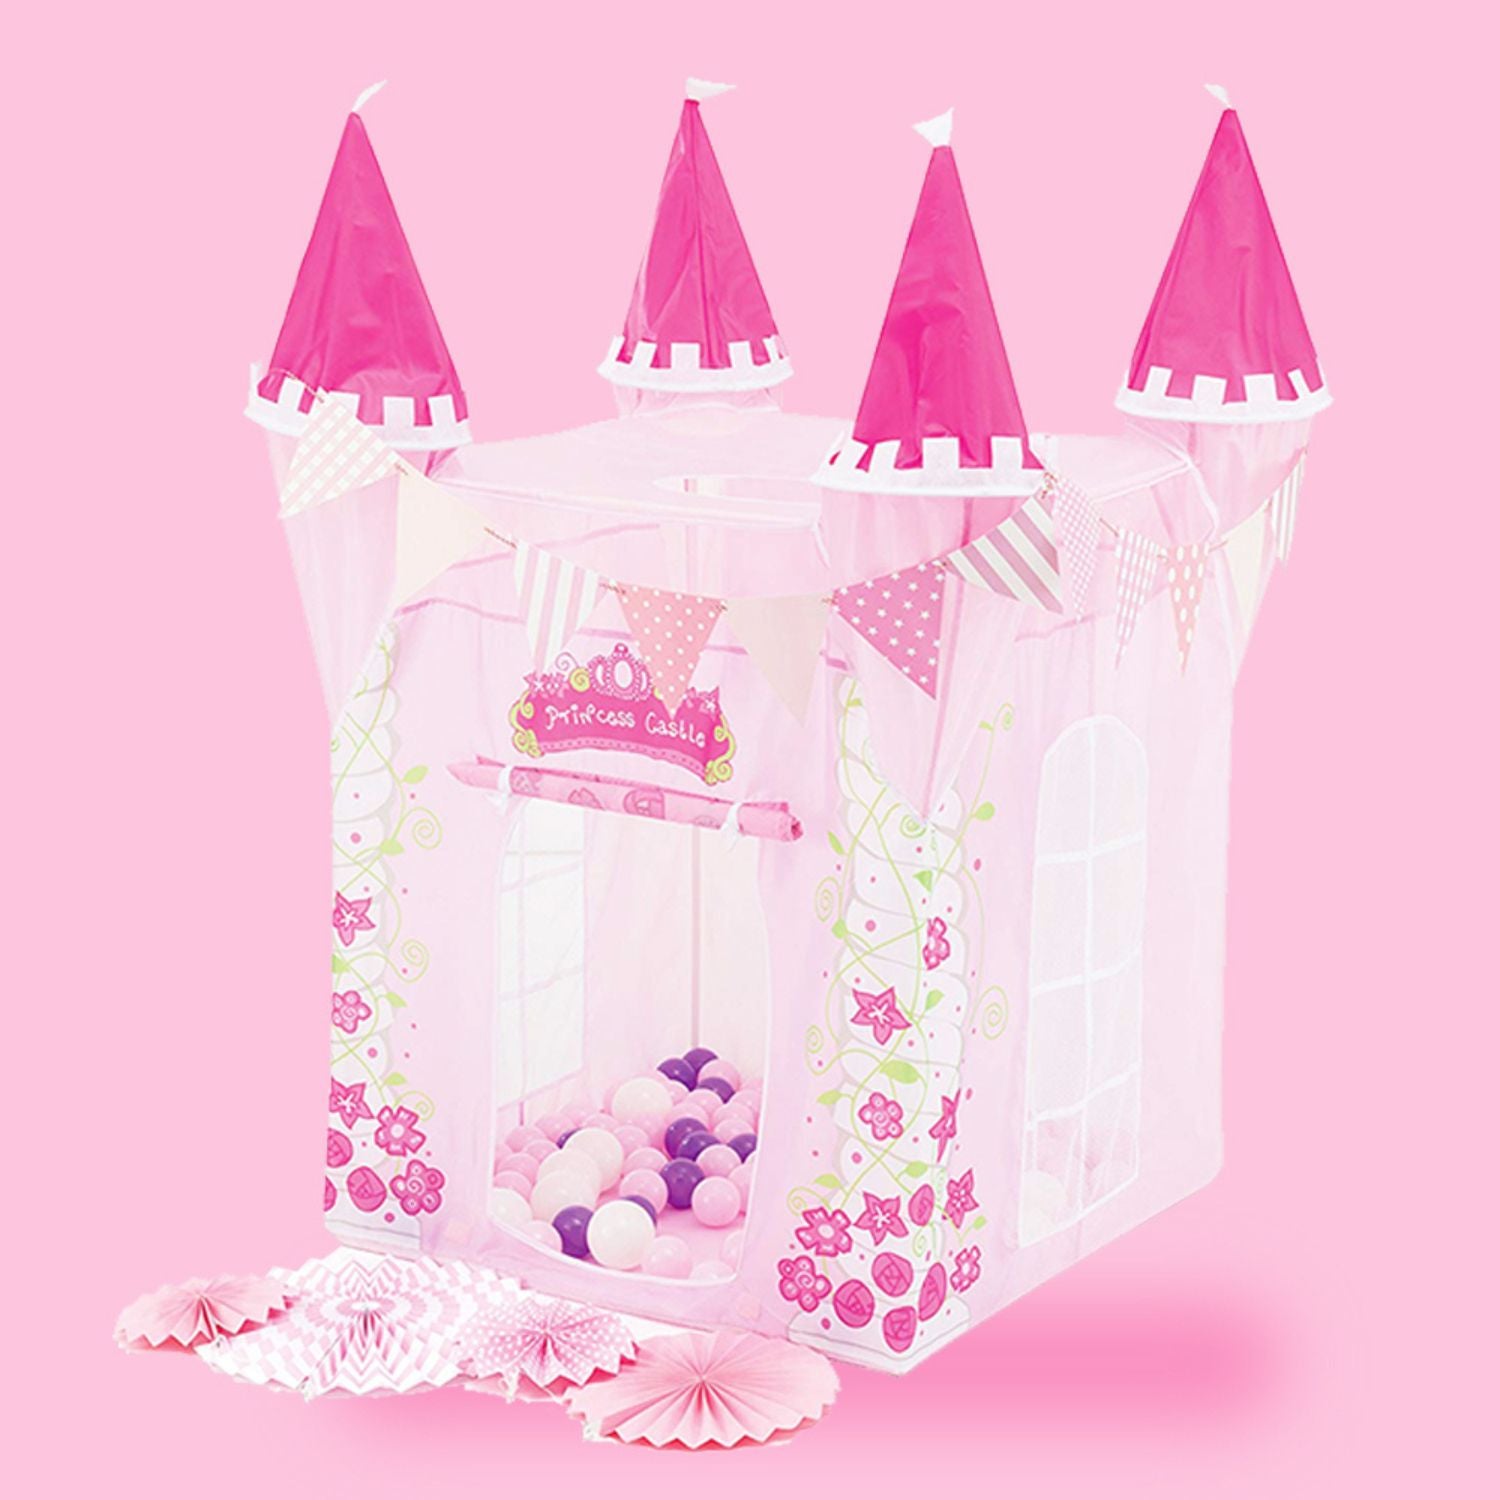 GOMINIMO Kids Princess Castle Tent (Pink)